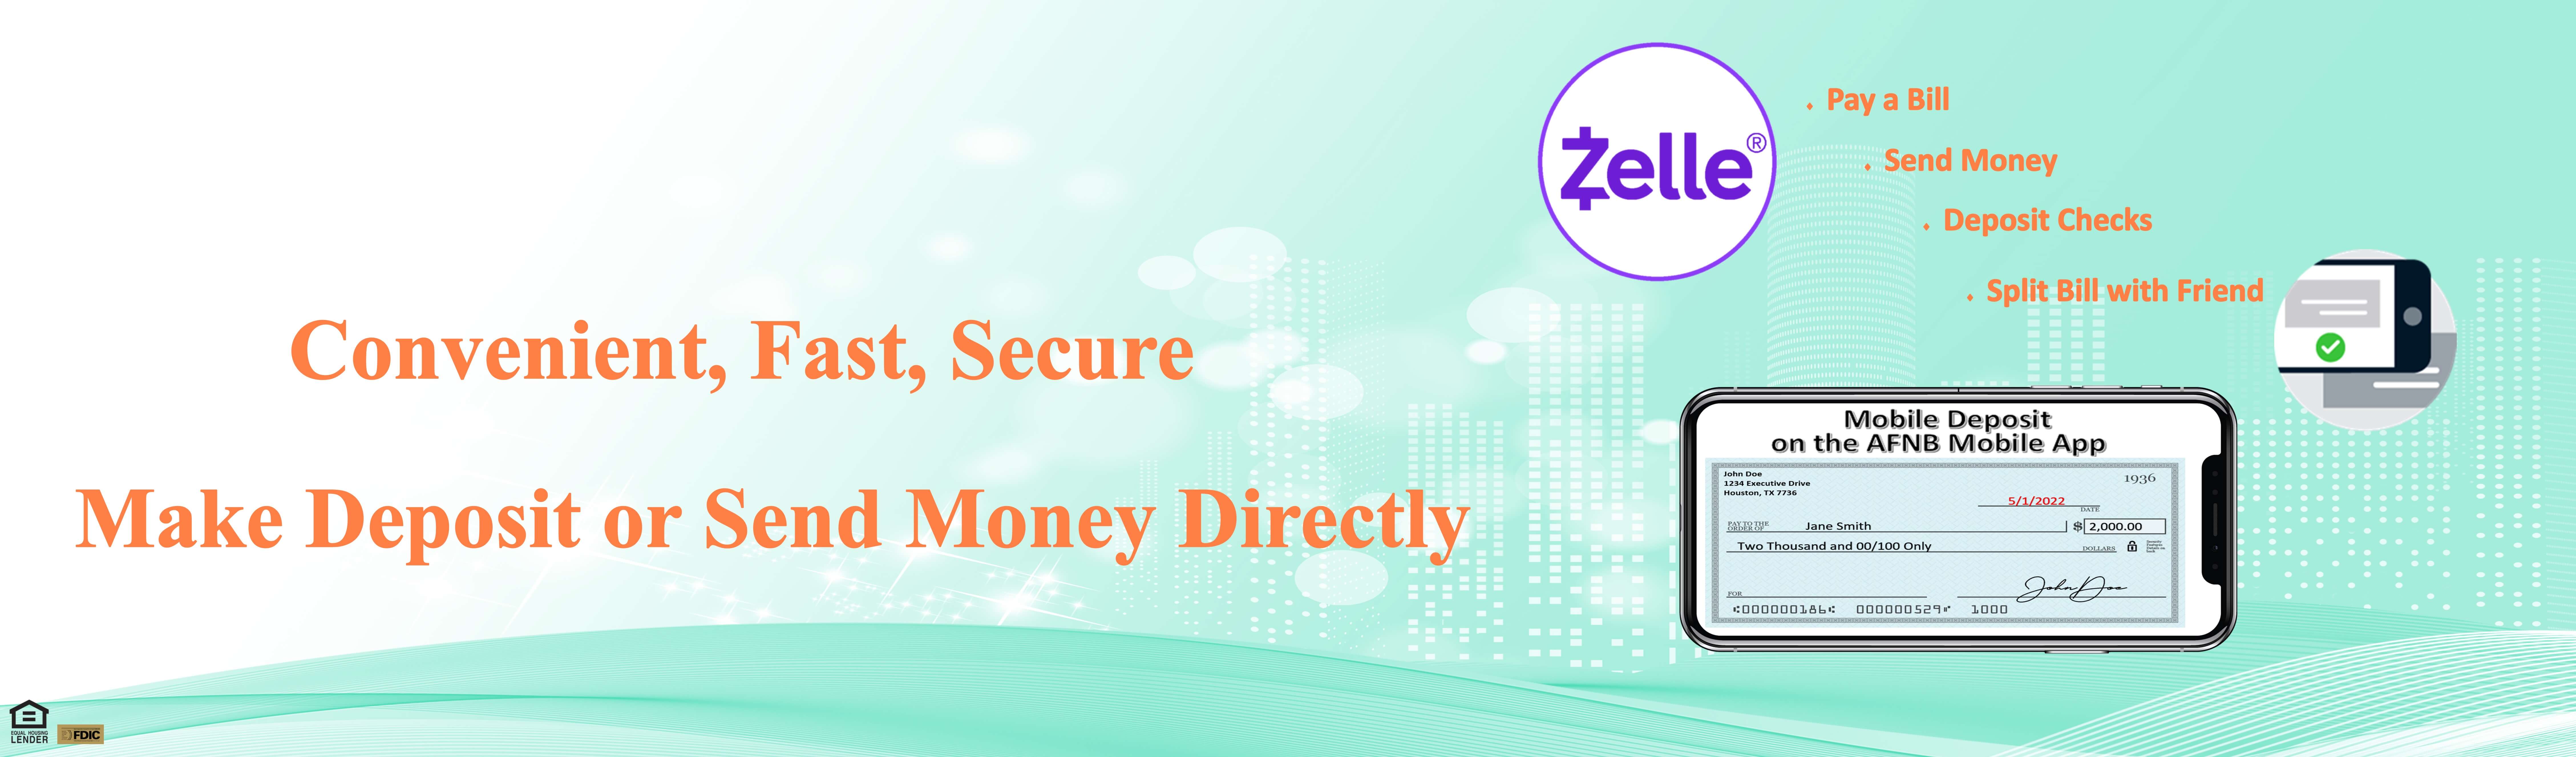 Convienent, Fast, Secure. Make deposit or send money directly. Zelle